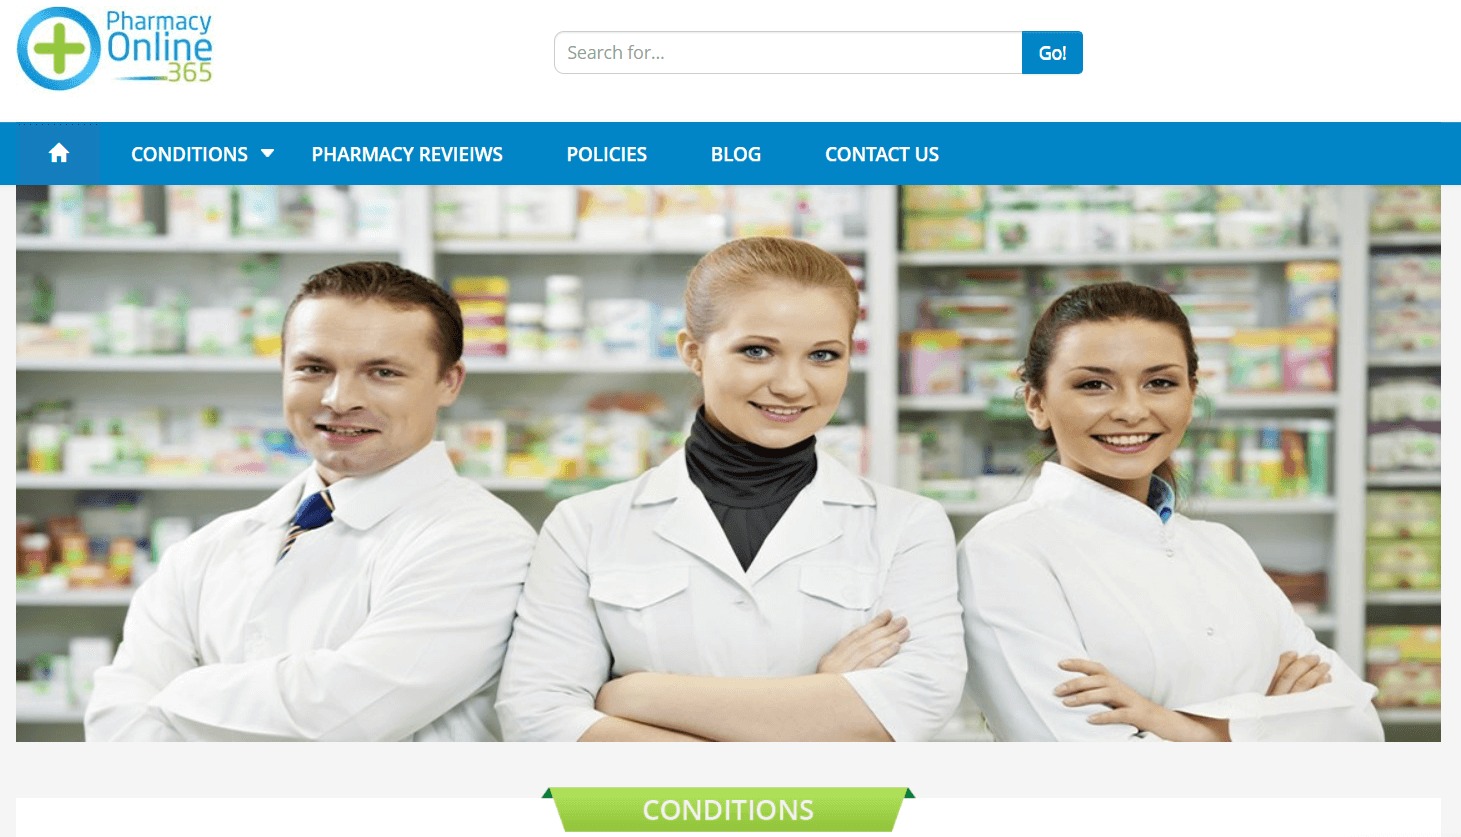 PharmacyOnline365 Review